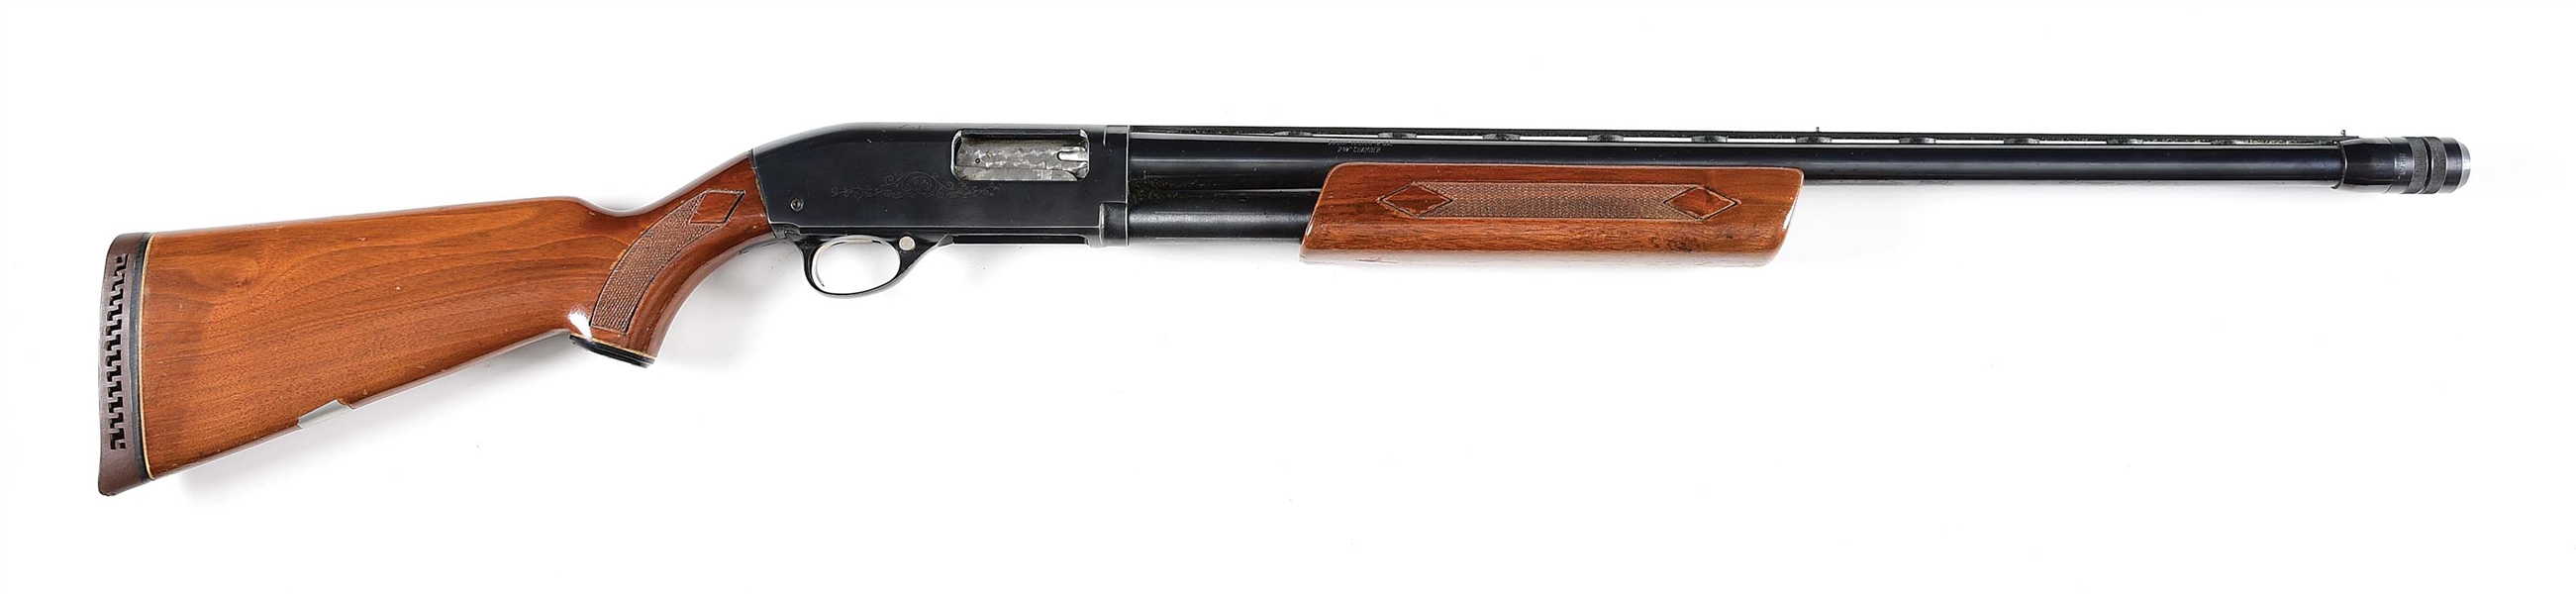 Ted williams shotgun model 300